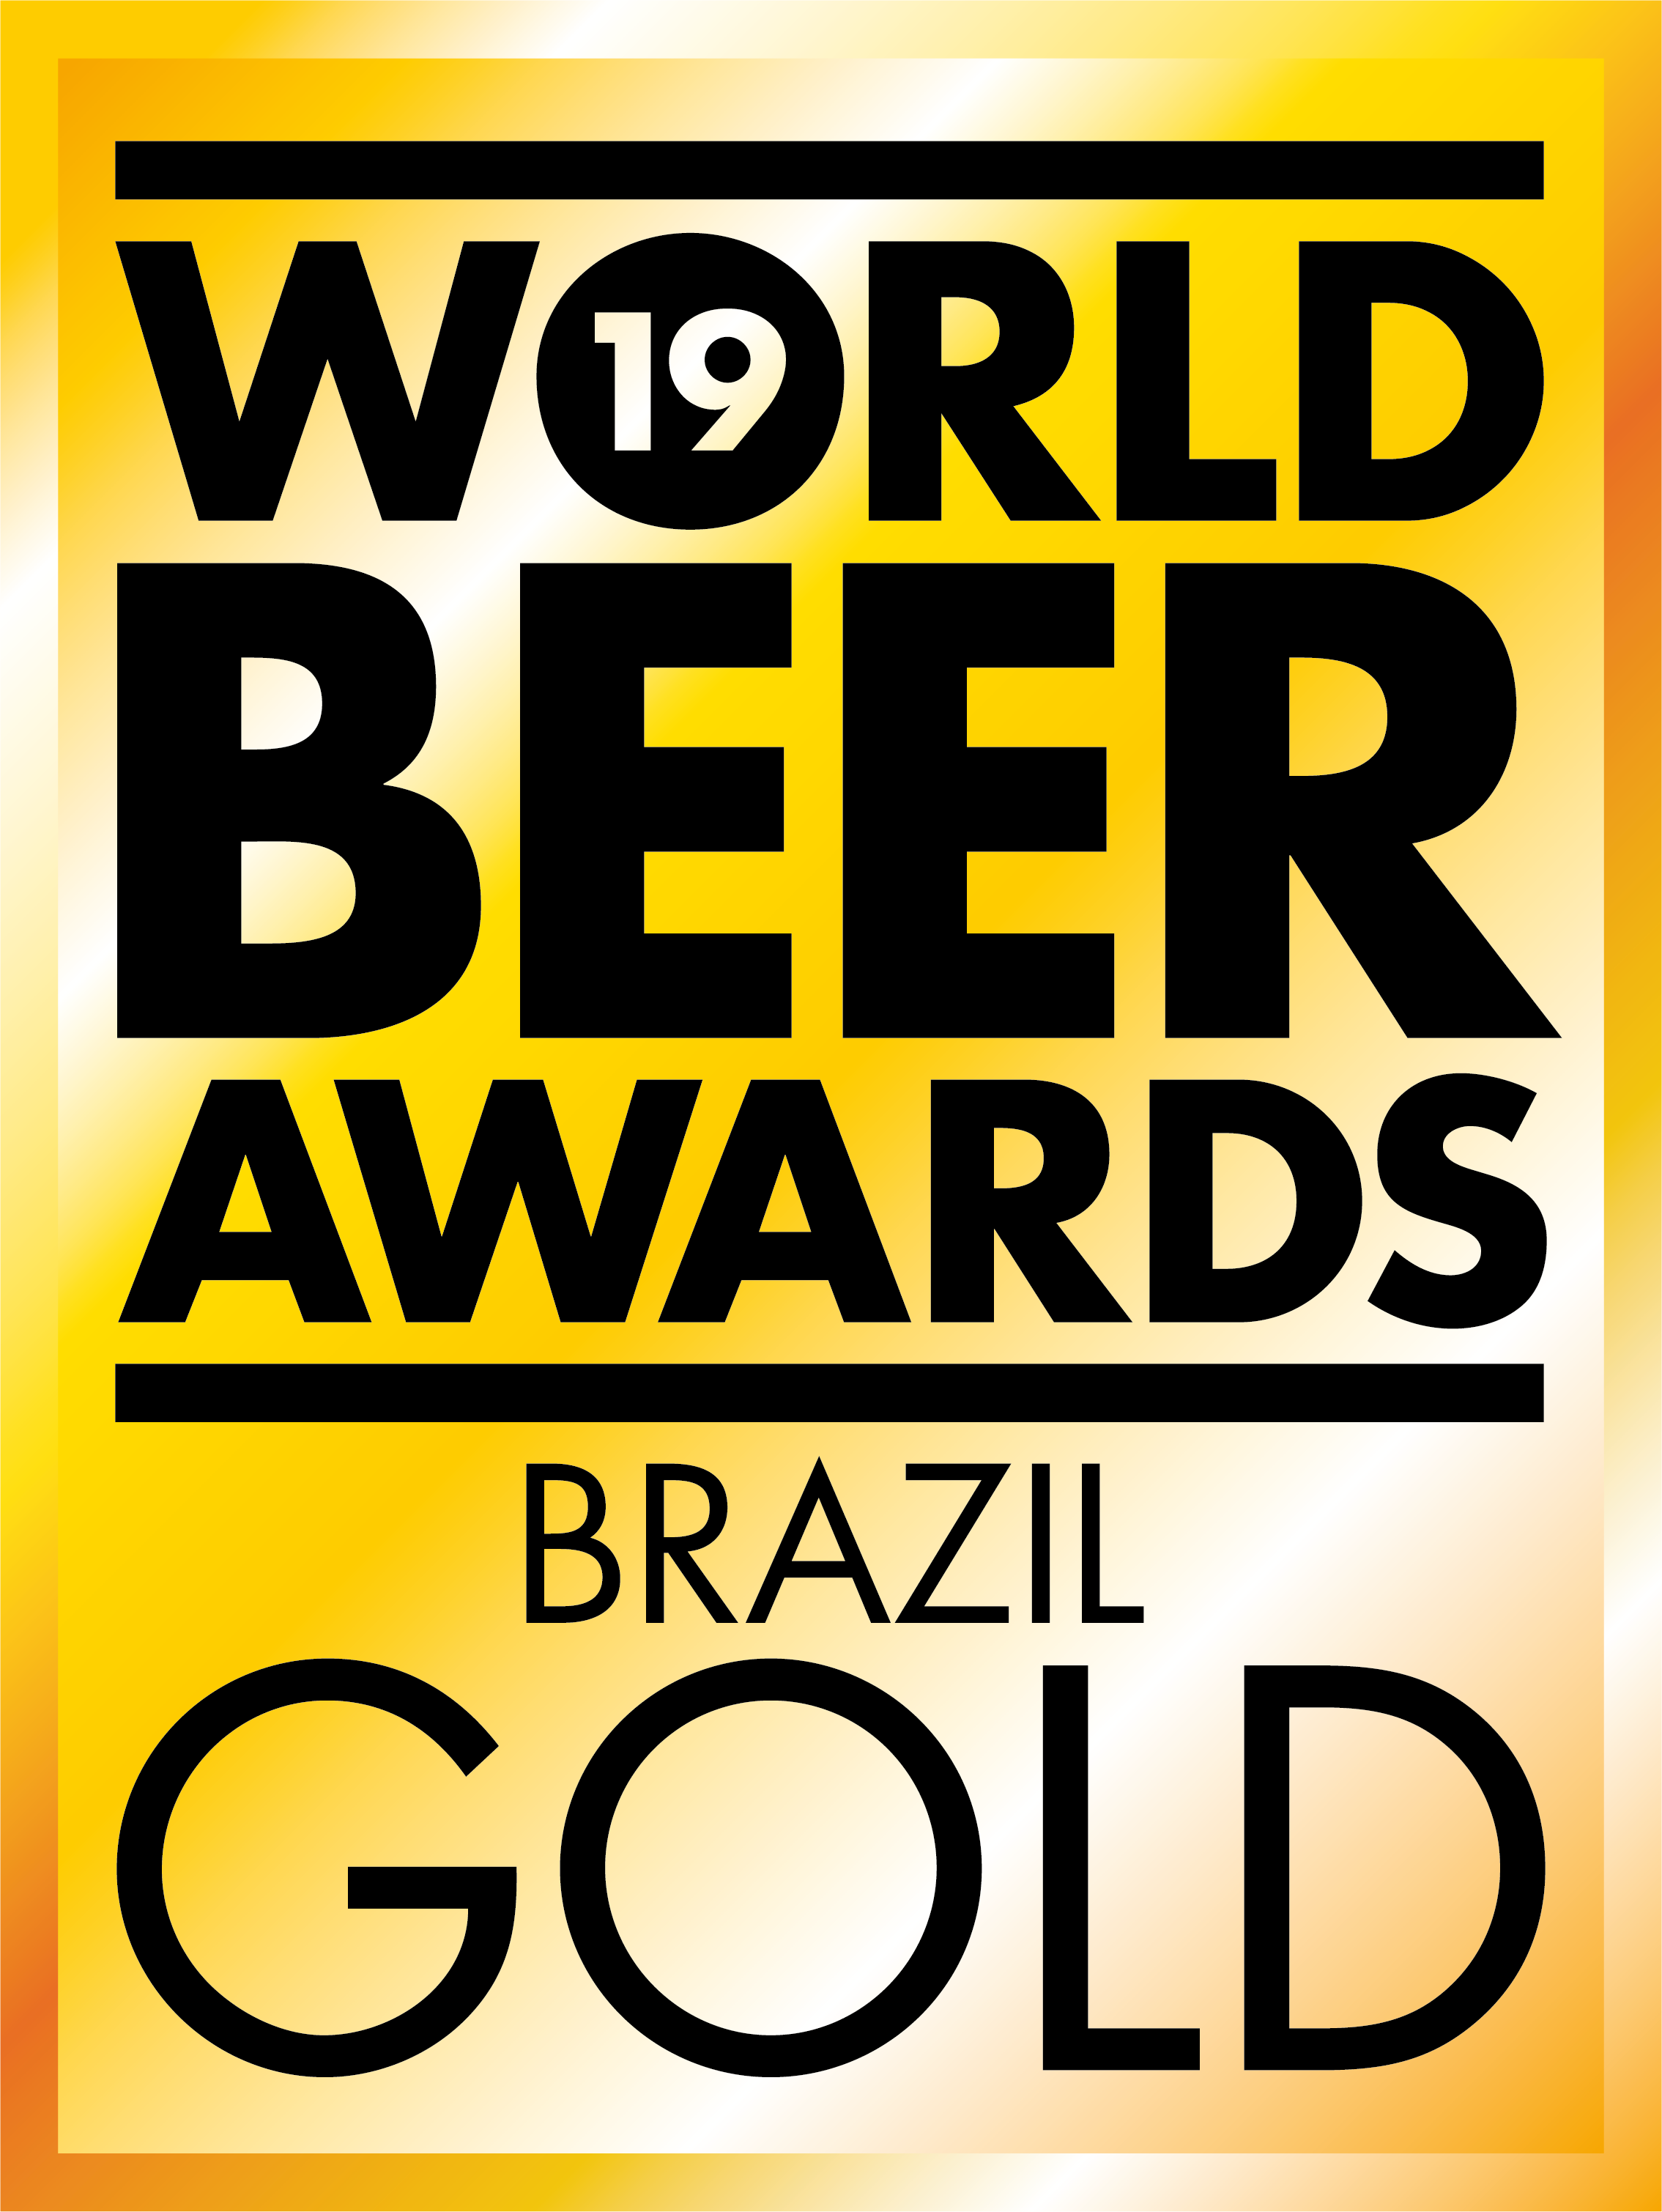 World Beer Awards 2019 - GOLD